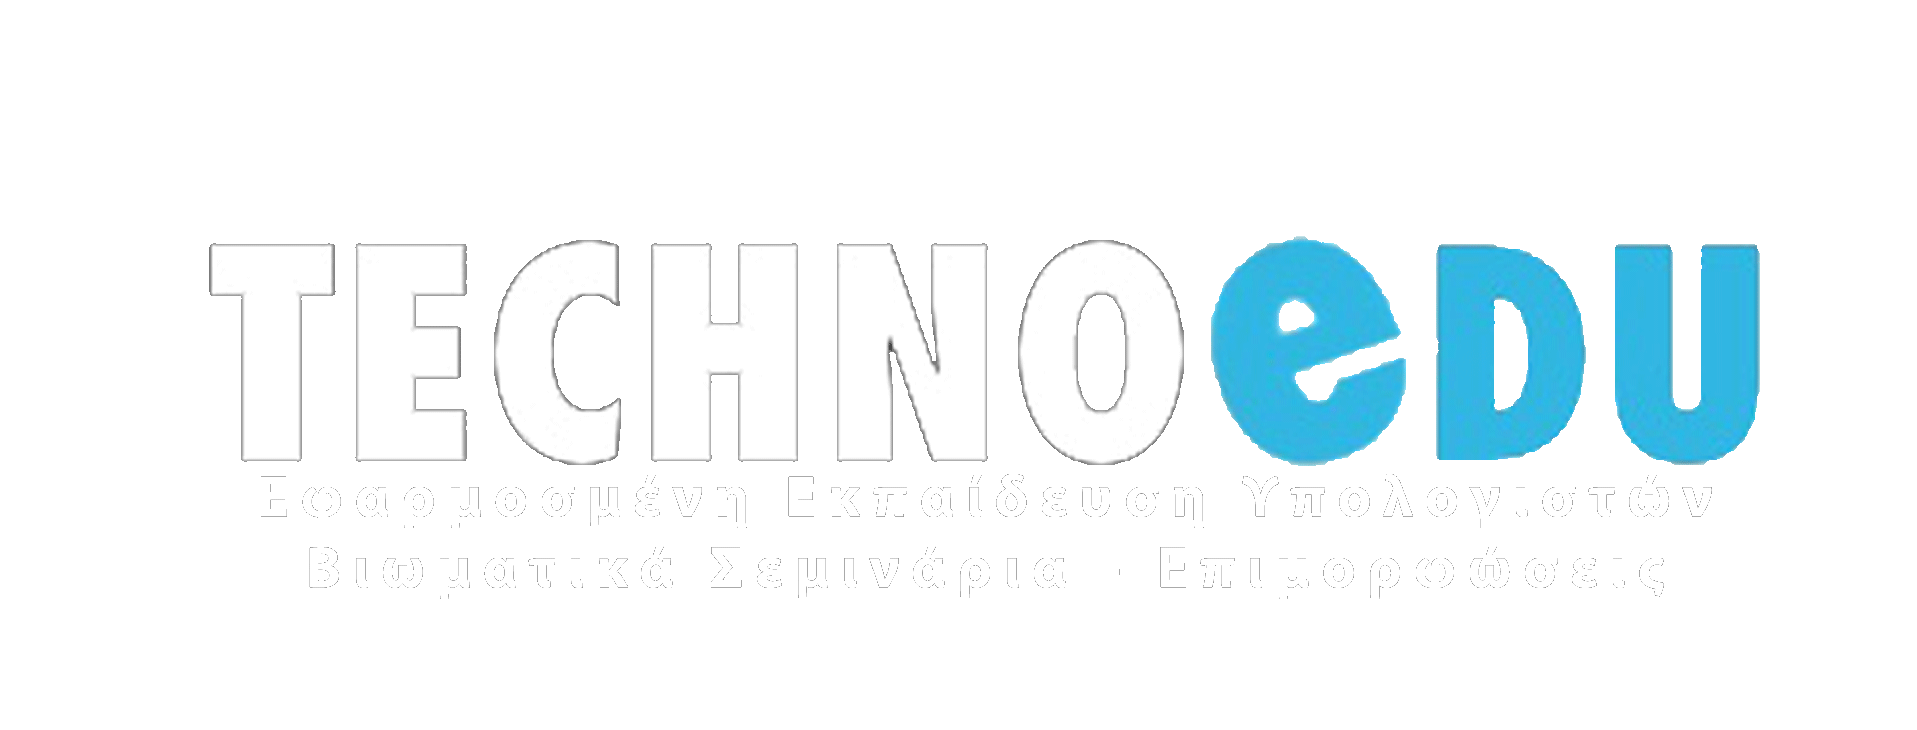 Technoedu_Logo_New_White_Web